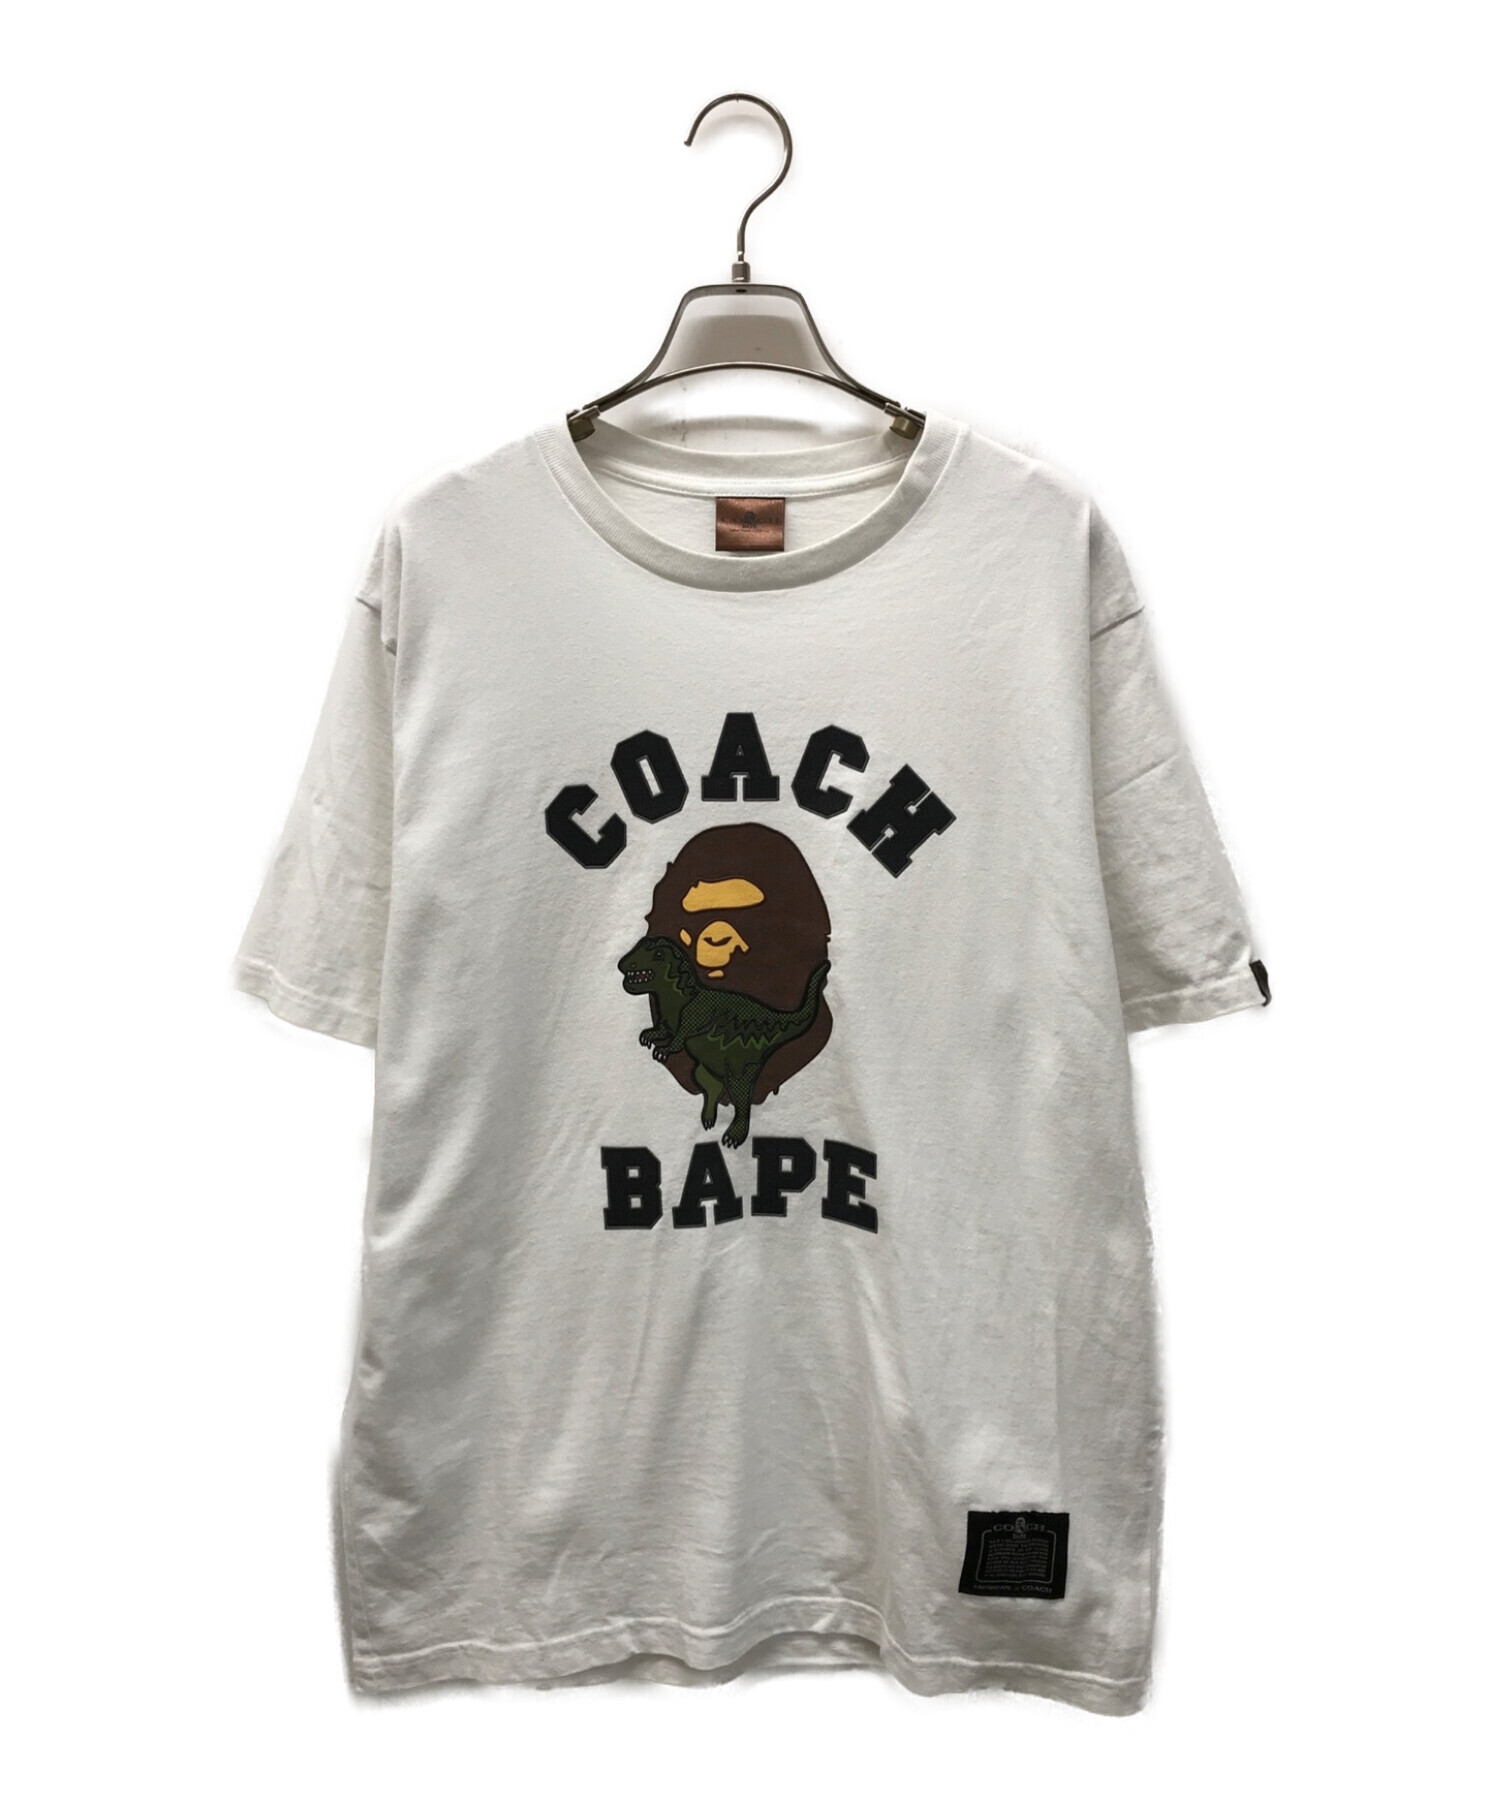 COACH (コーチ) A BATHING APE (ア ベイシング エイプ) ダイナソーロゴTシャツ ホワイト サイズ:M 170/80A